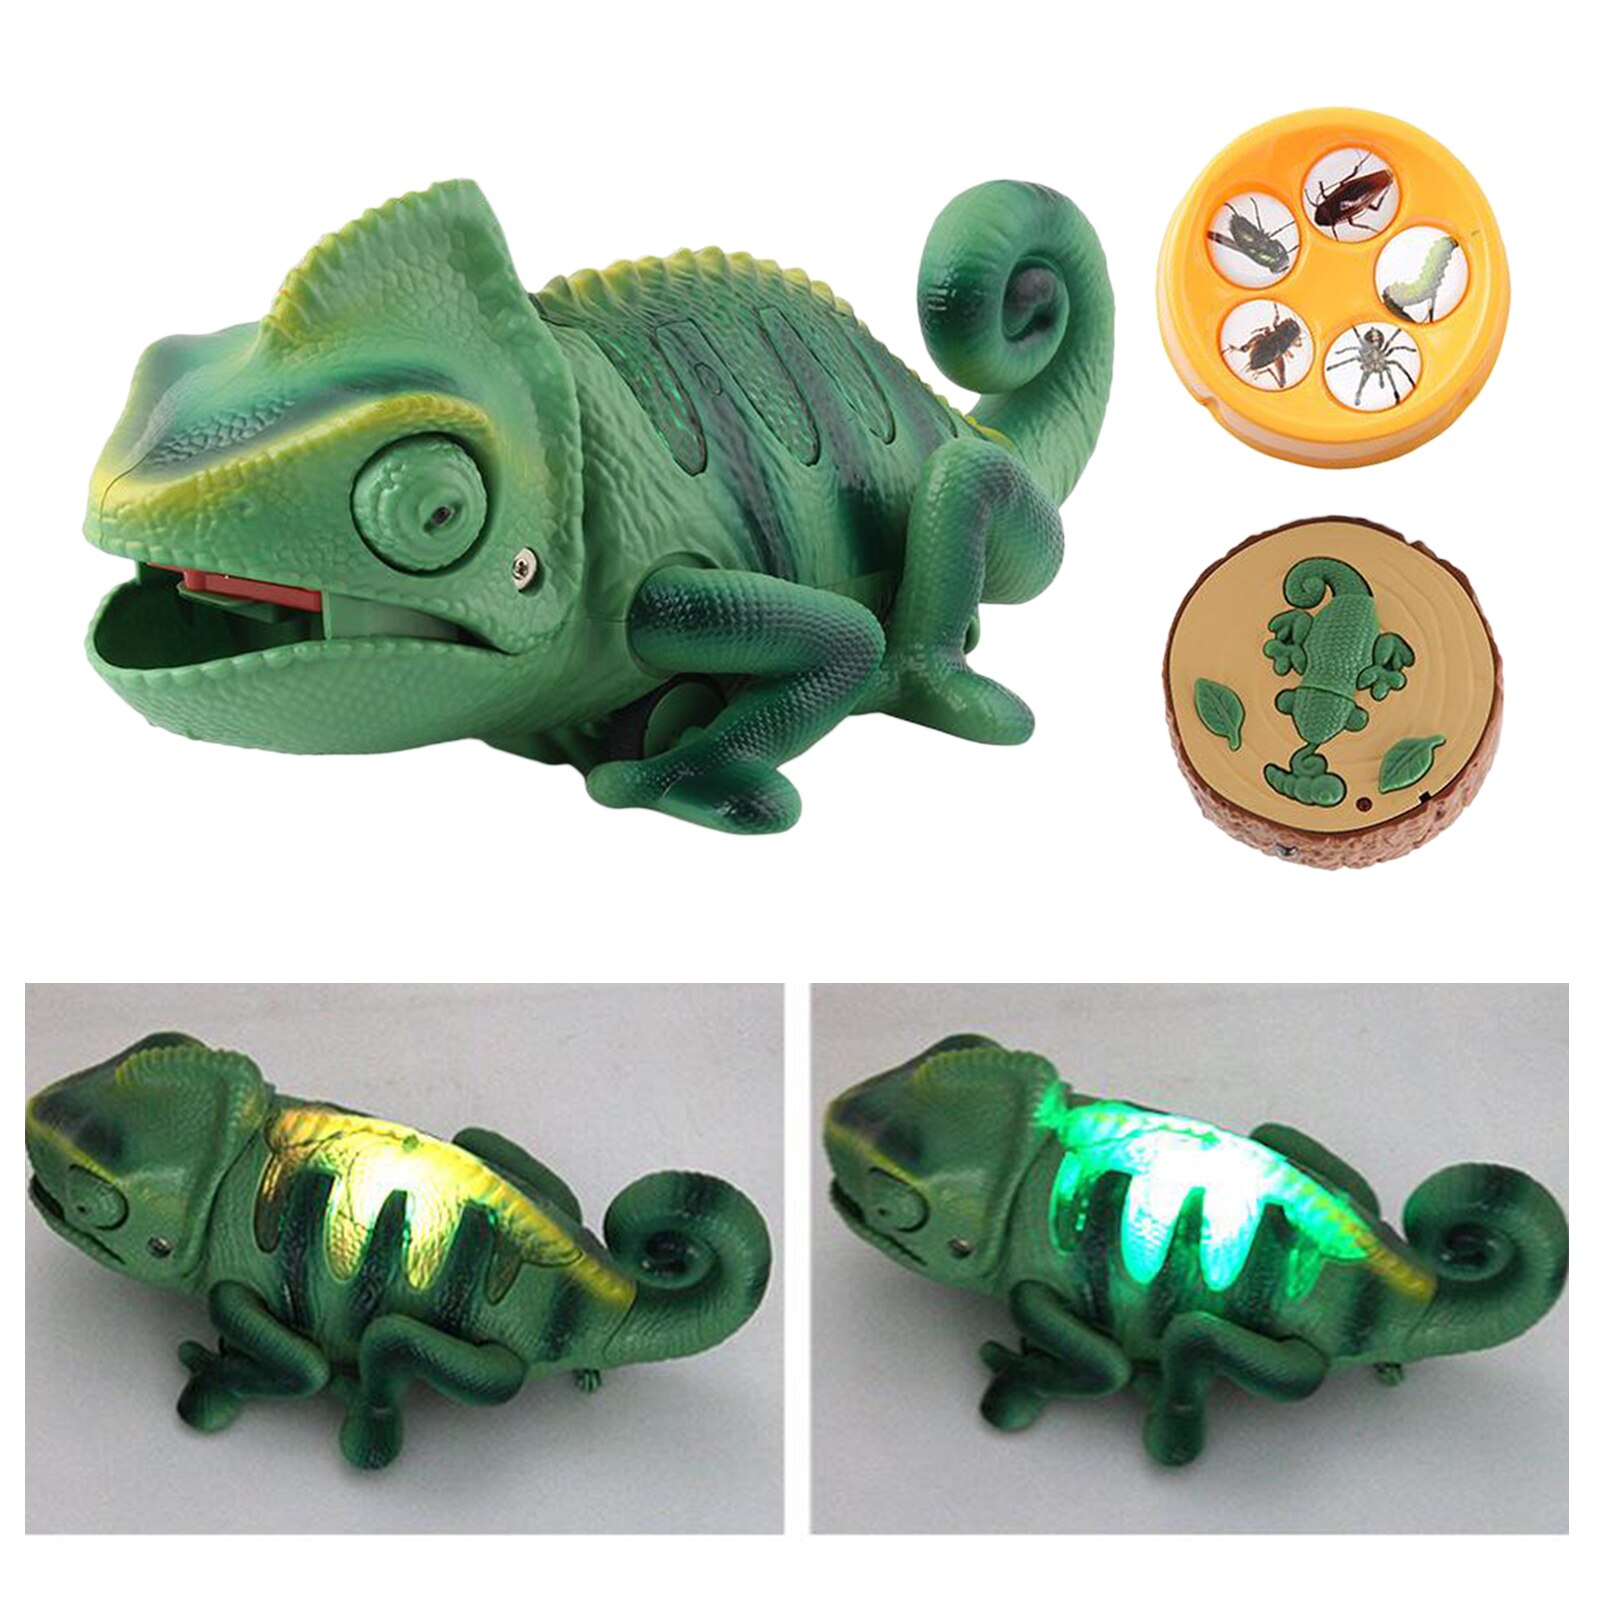 Afstandsbediening Kameleon Speelgoed Met Multi Gekleurde Led-verlichting, Duurzaam Rc Speelgoed Voor Kinderen, schattige Dieren Speelgoed Voor Kinderen